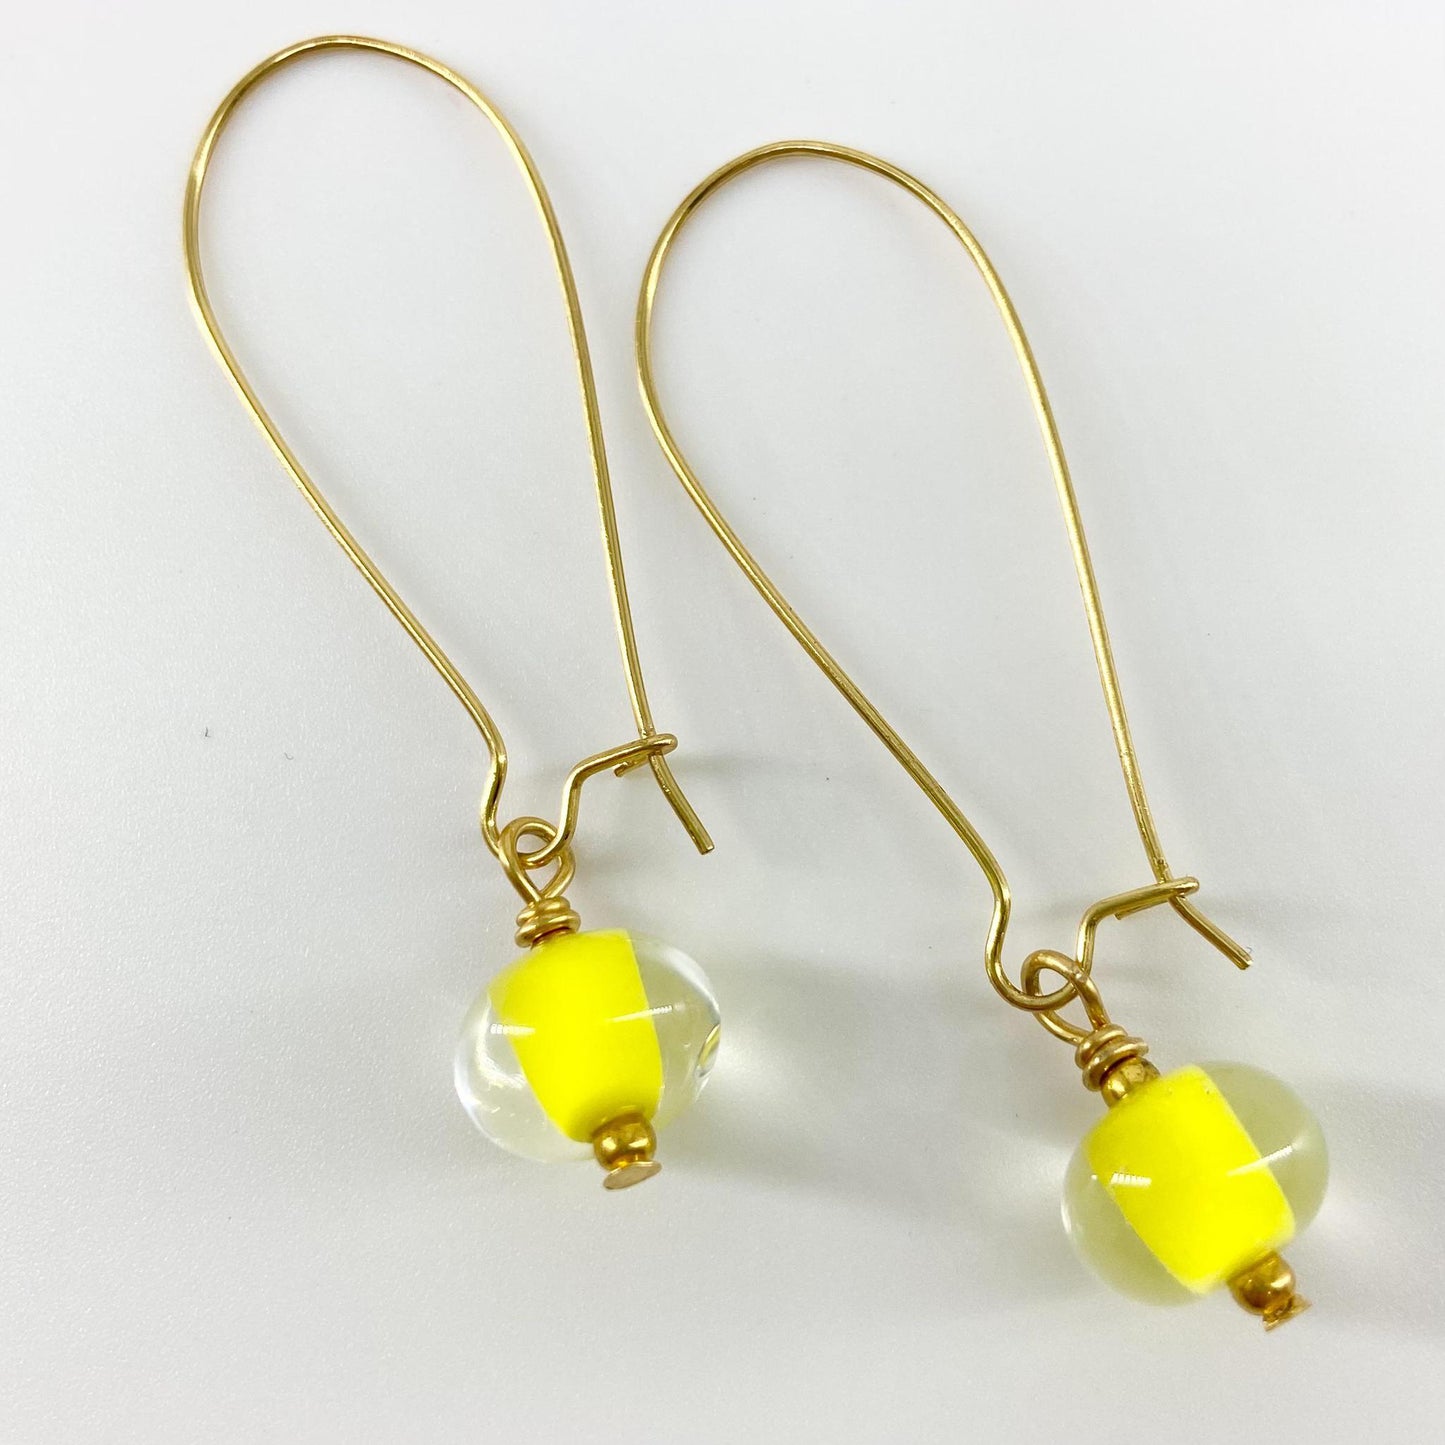 Earrings - Encased Yellow - Glass & Goldfill Long Wire (Video)